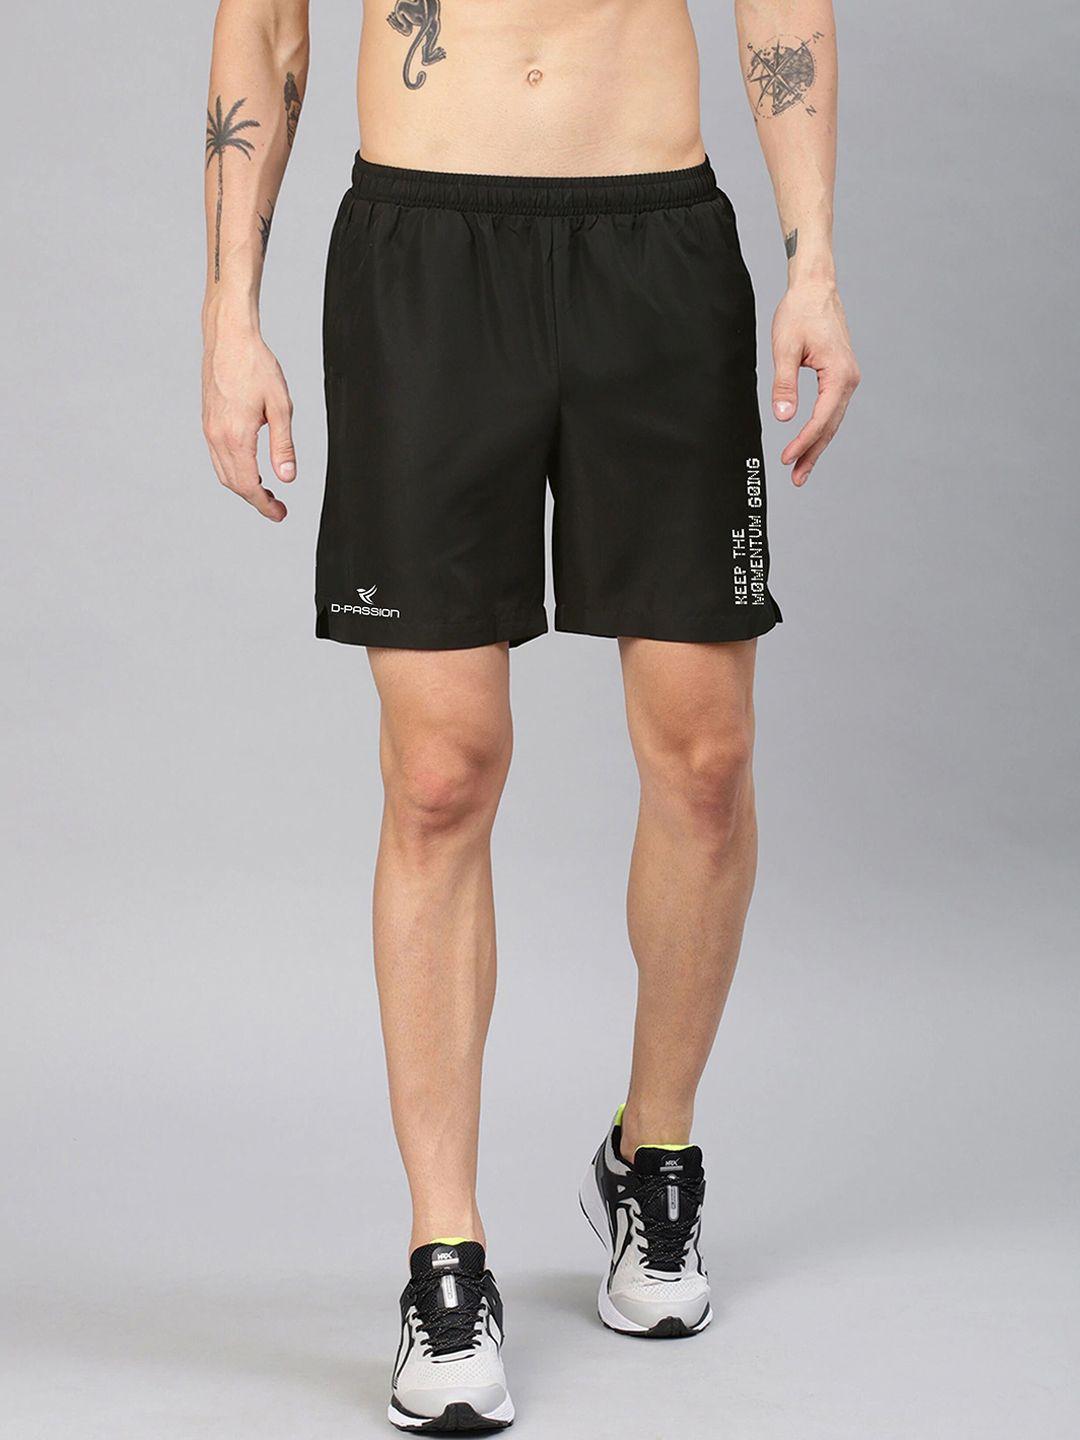 dpassion-men-black-typography-printed-training-or-gym-sports-shorts